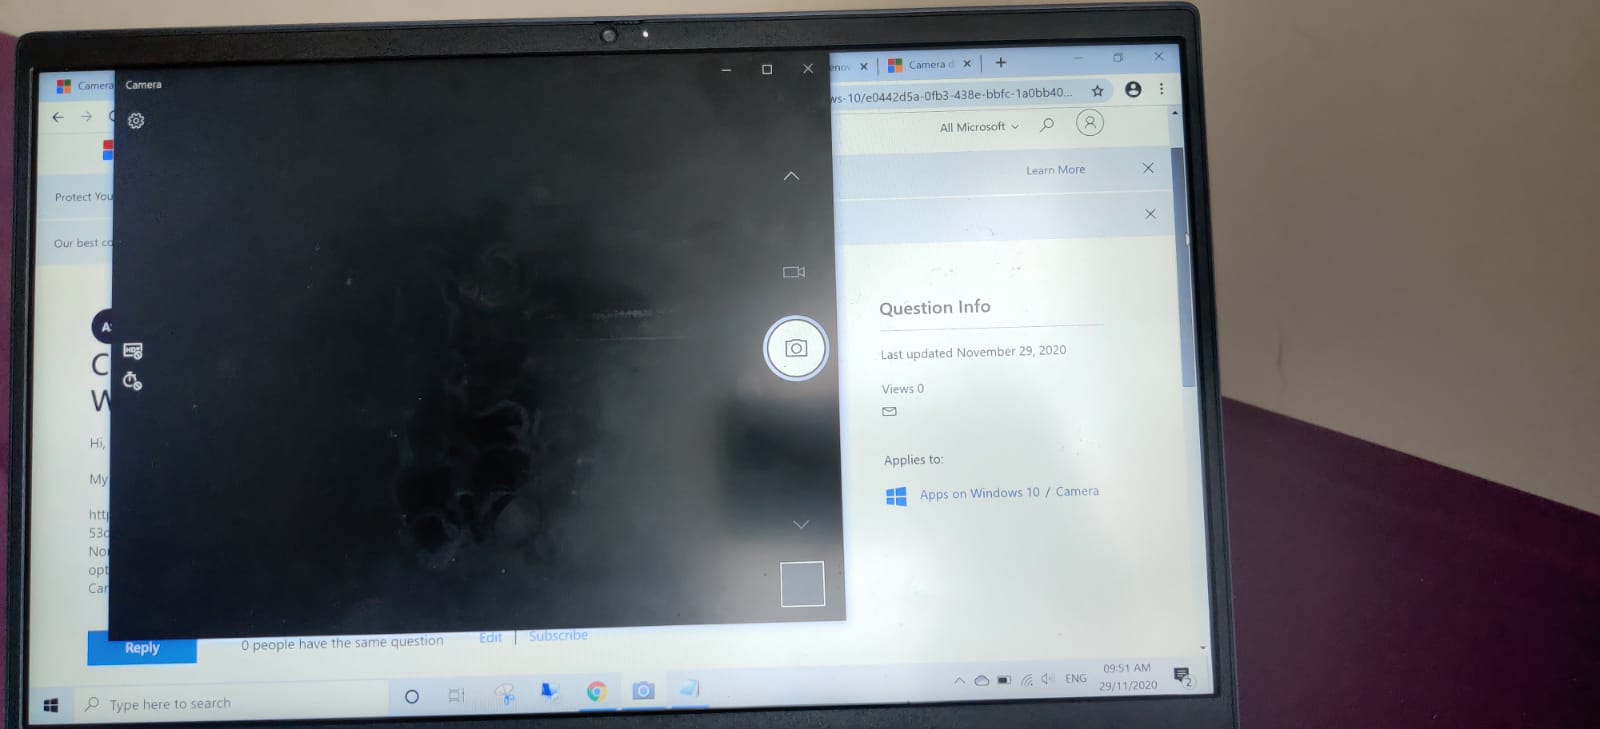 Camera light on but no image coming | Windows 10 - Lenovo ideapad -  Microsoft Community